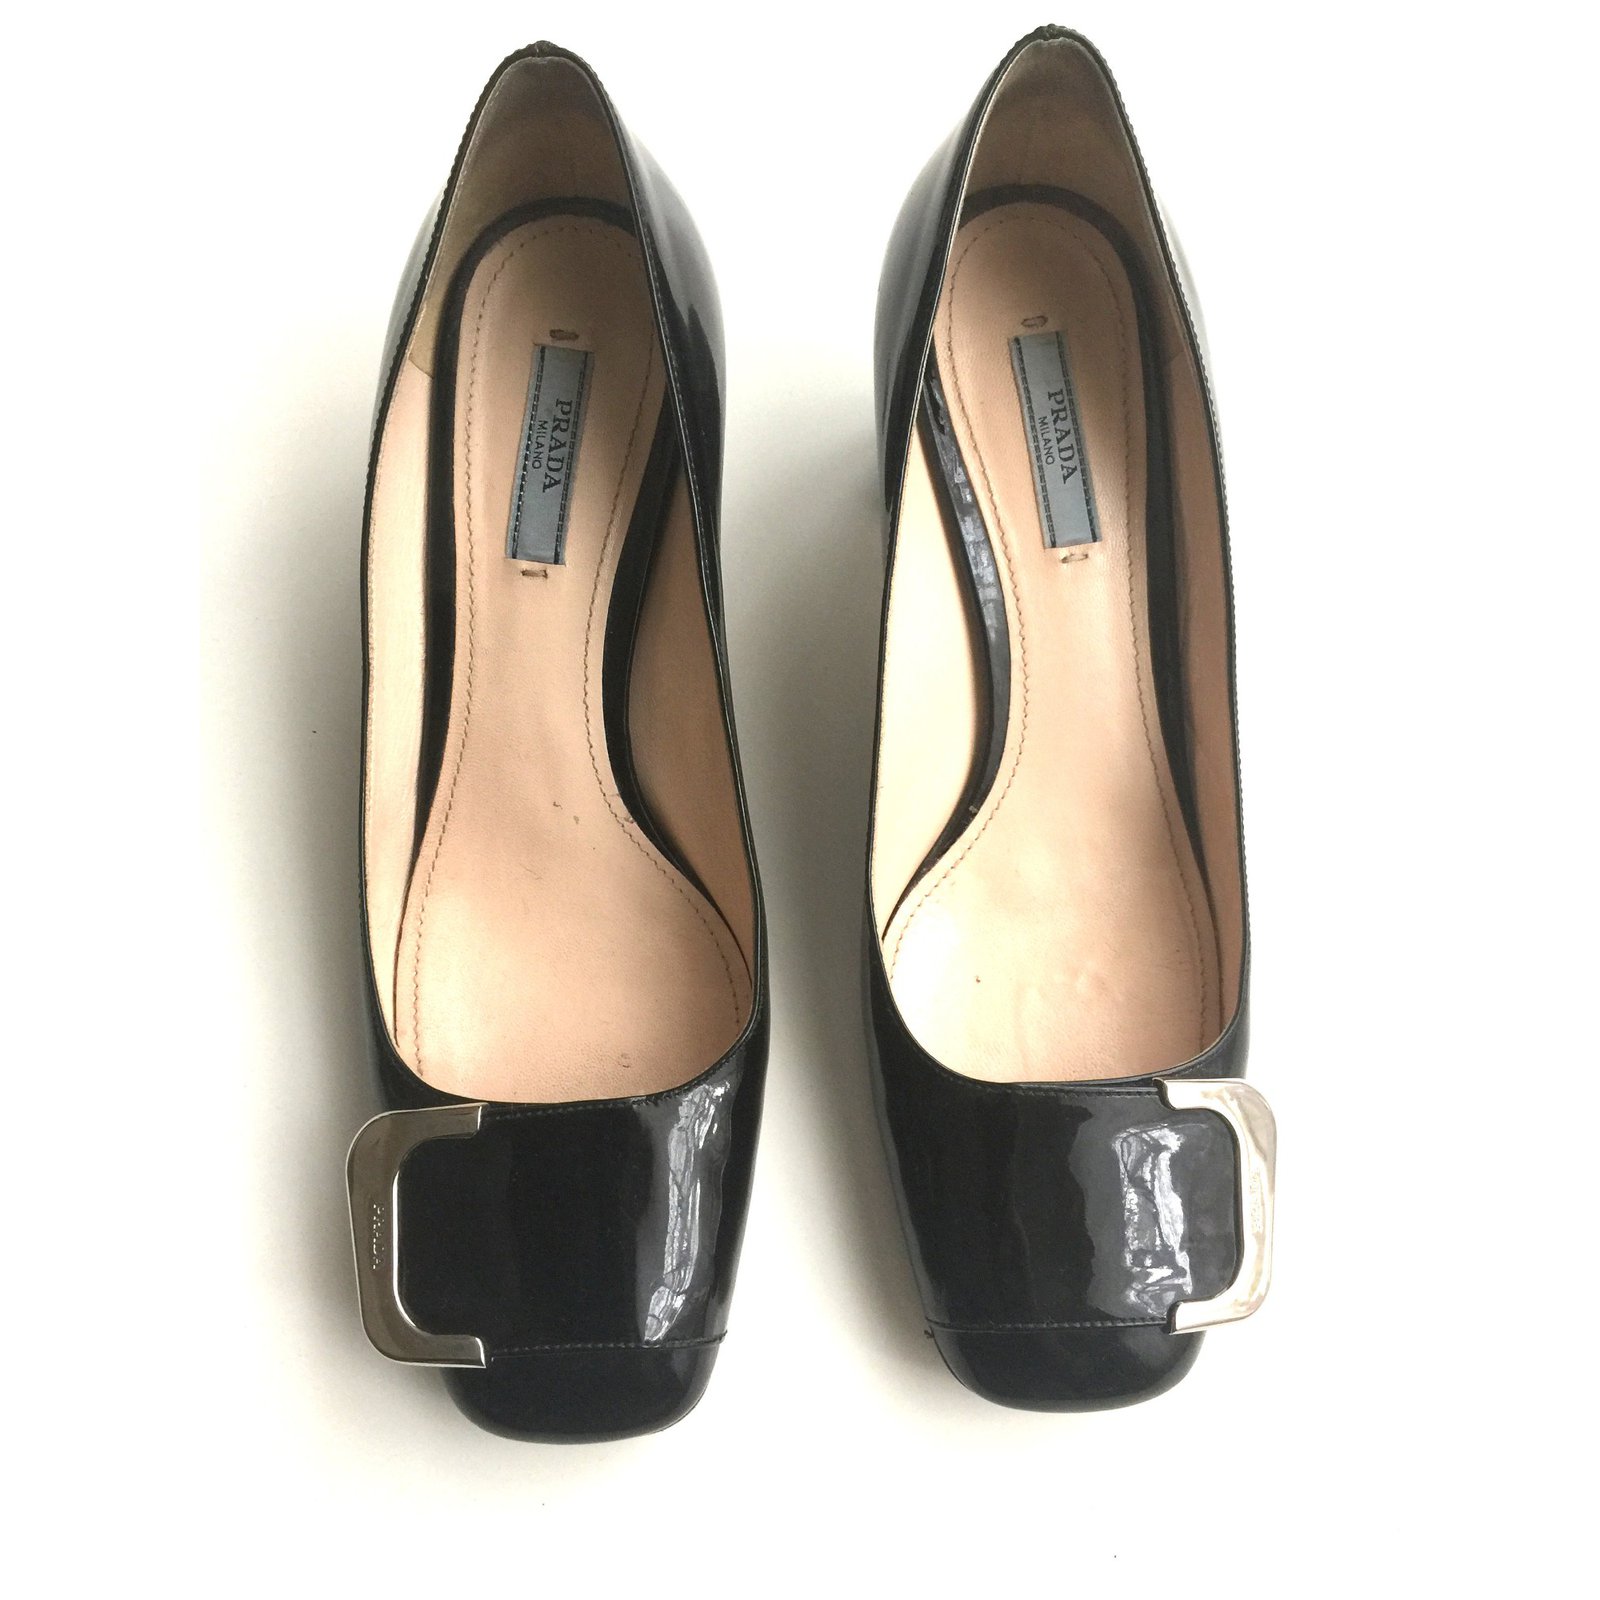 black patent leather pumps block heel